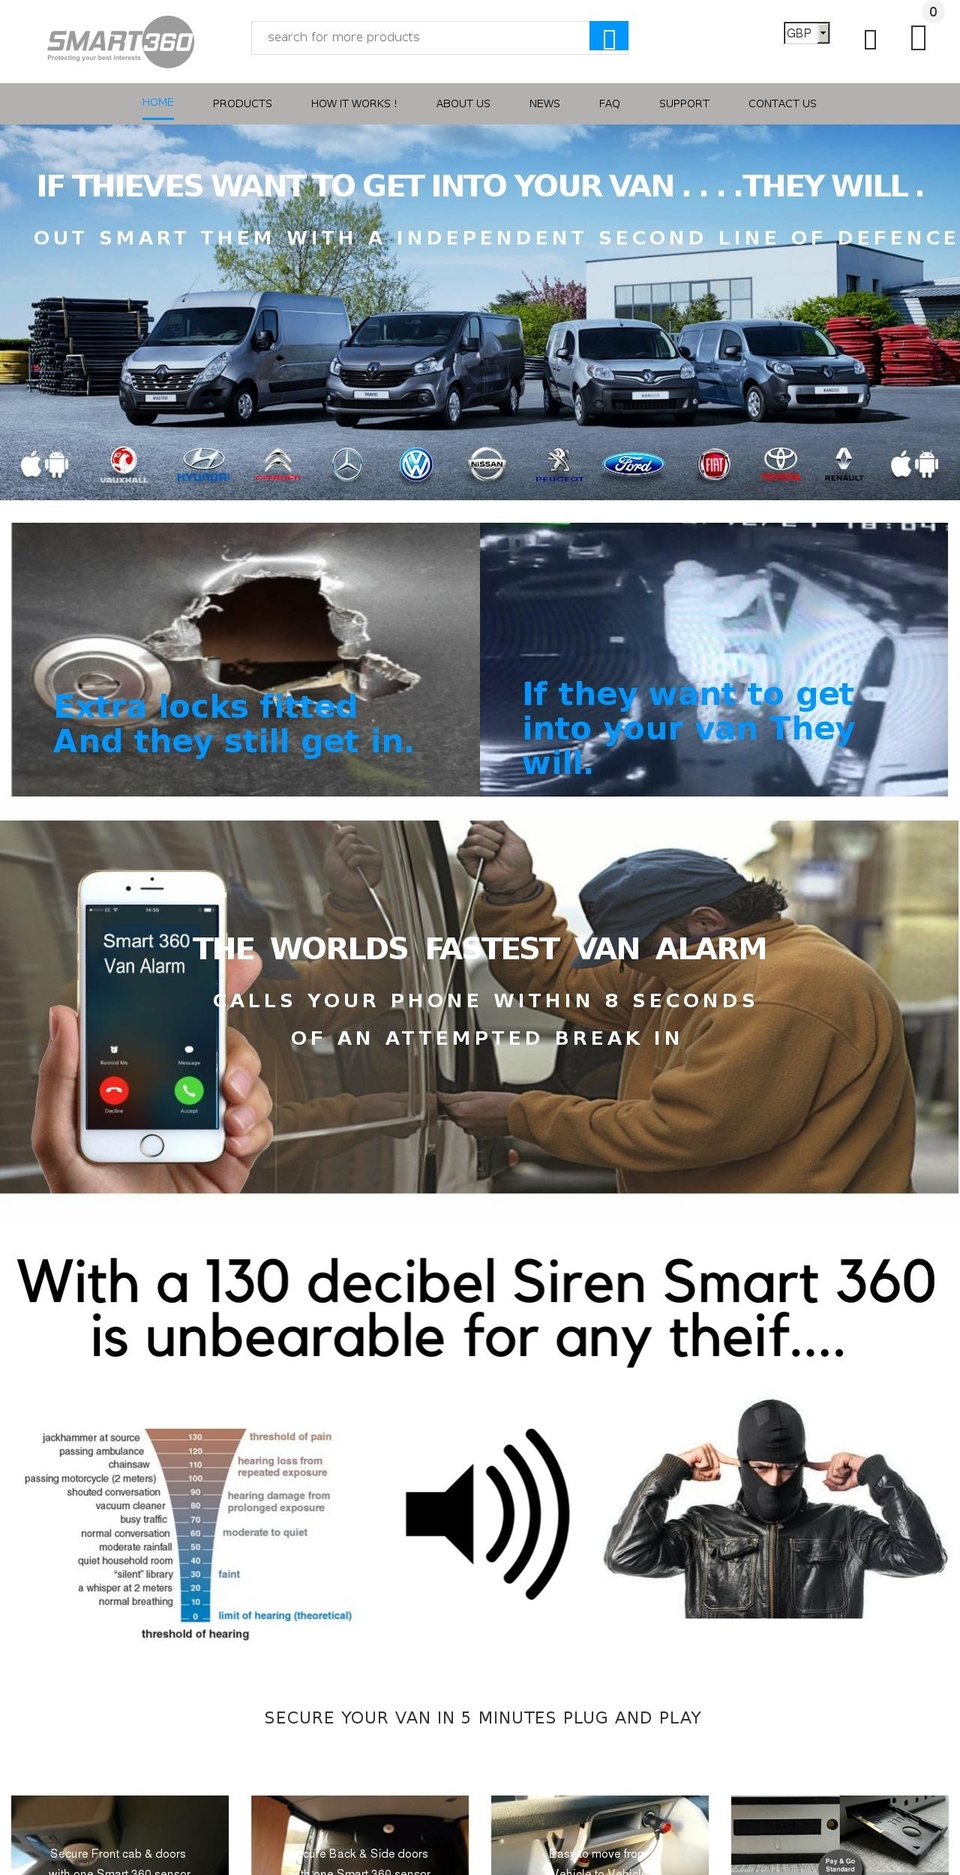 smart360.co shopify website screenshot